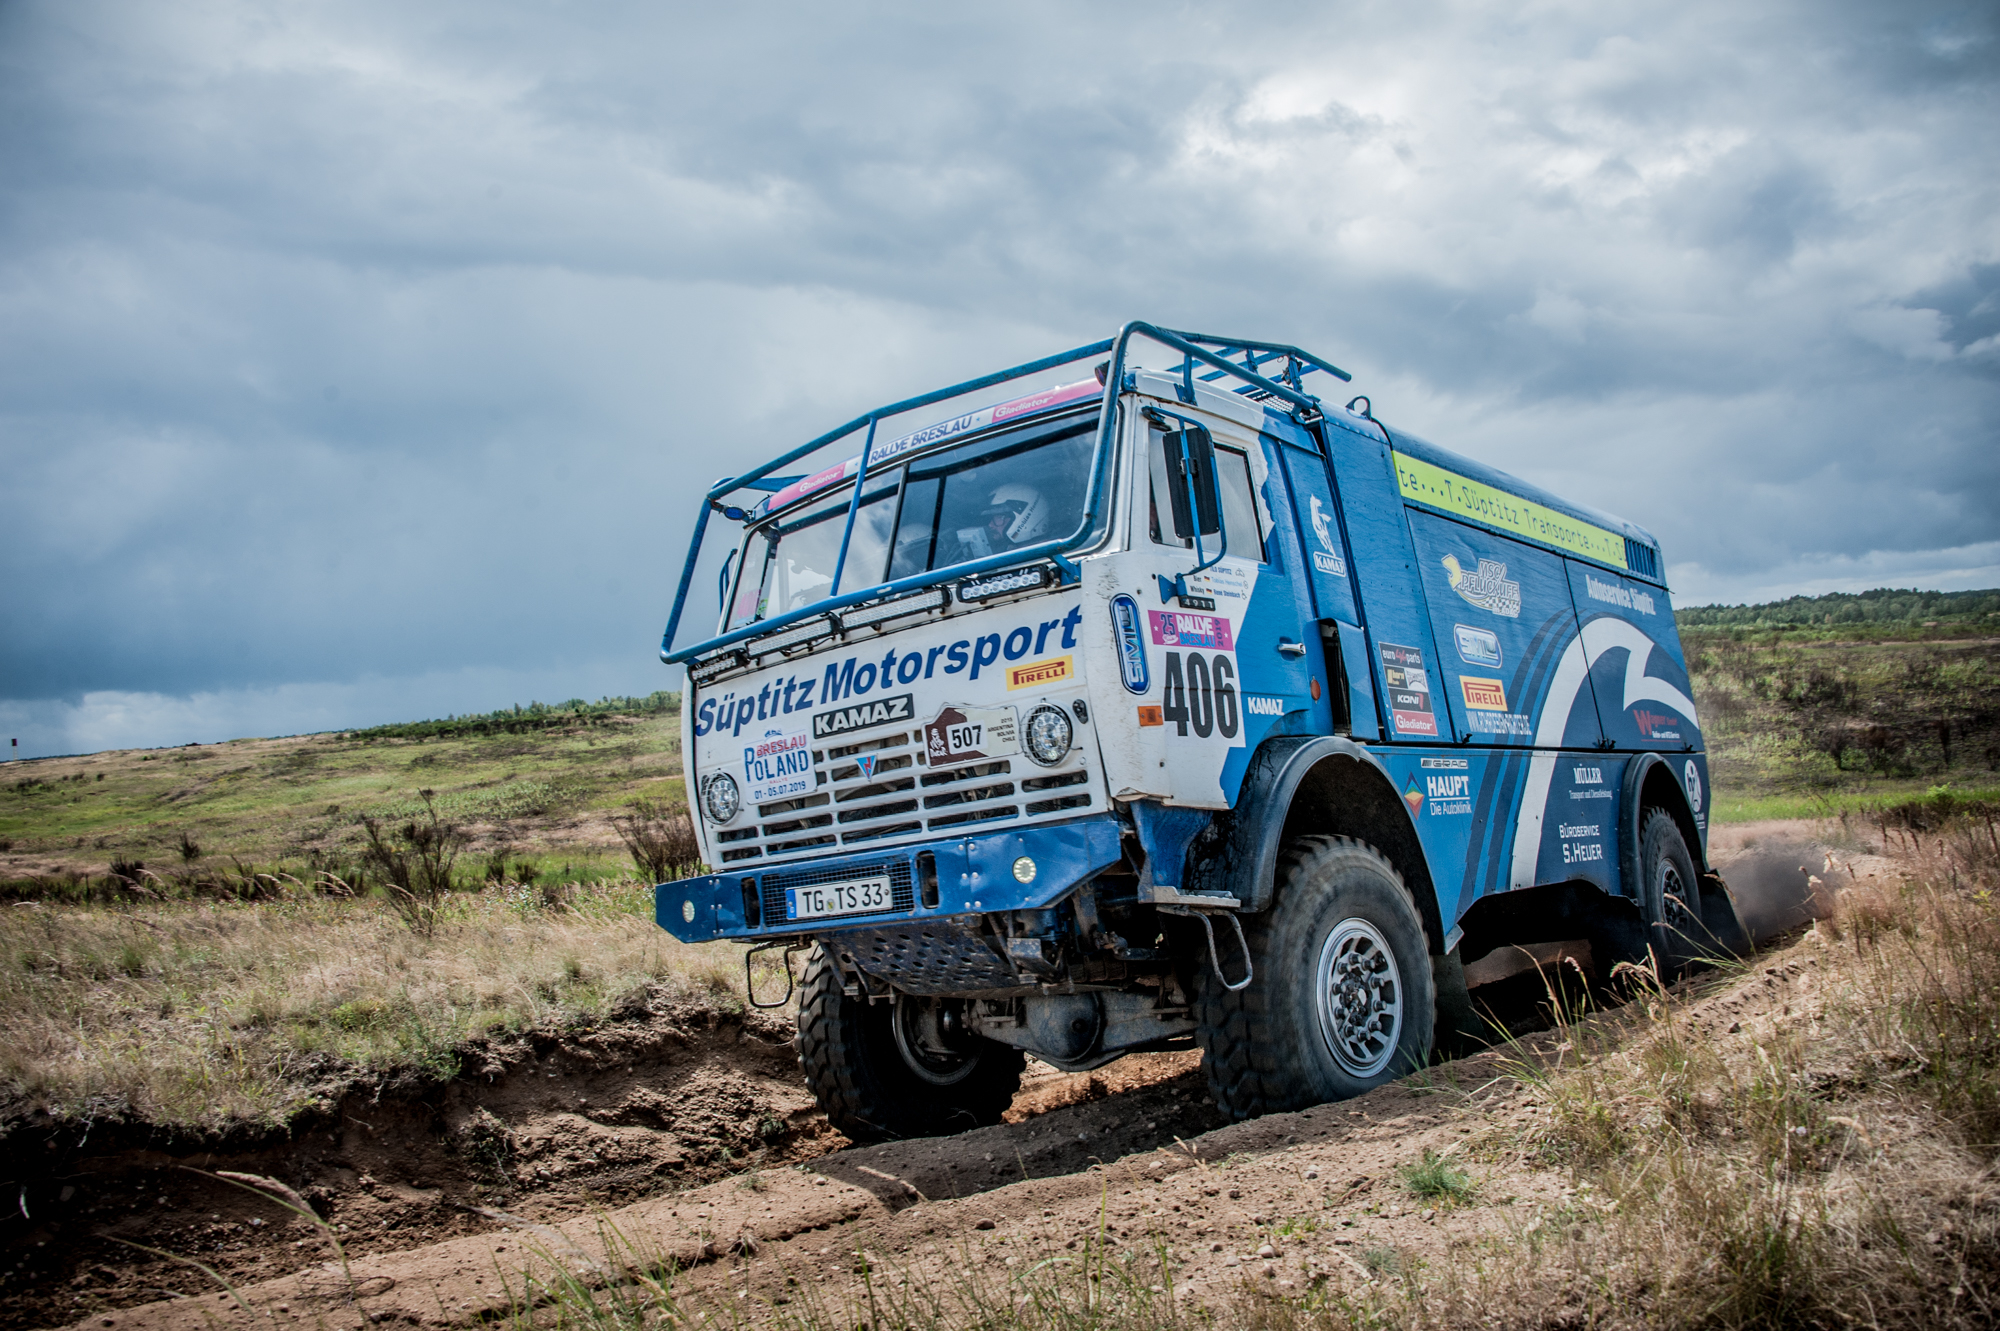 Rallye Breslau Poland 2019 : the decisionmaker! - Alex Miedema